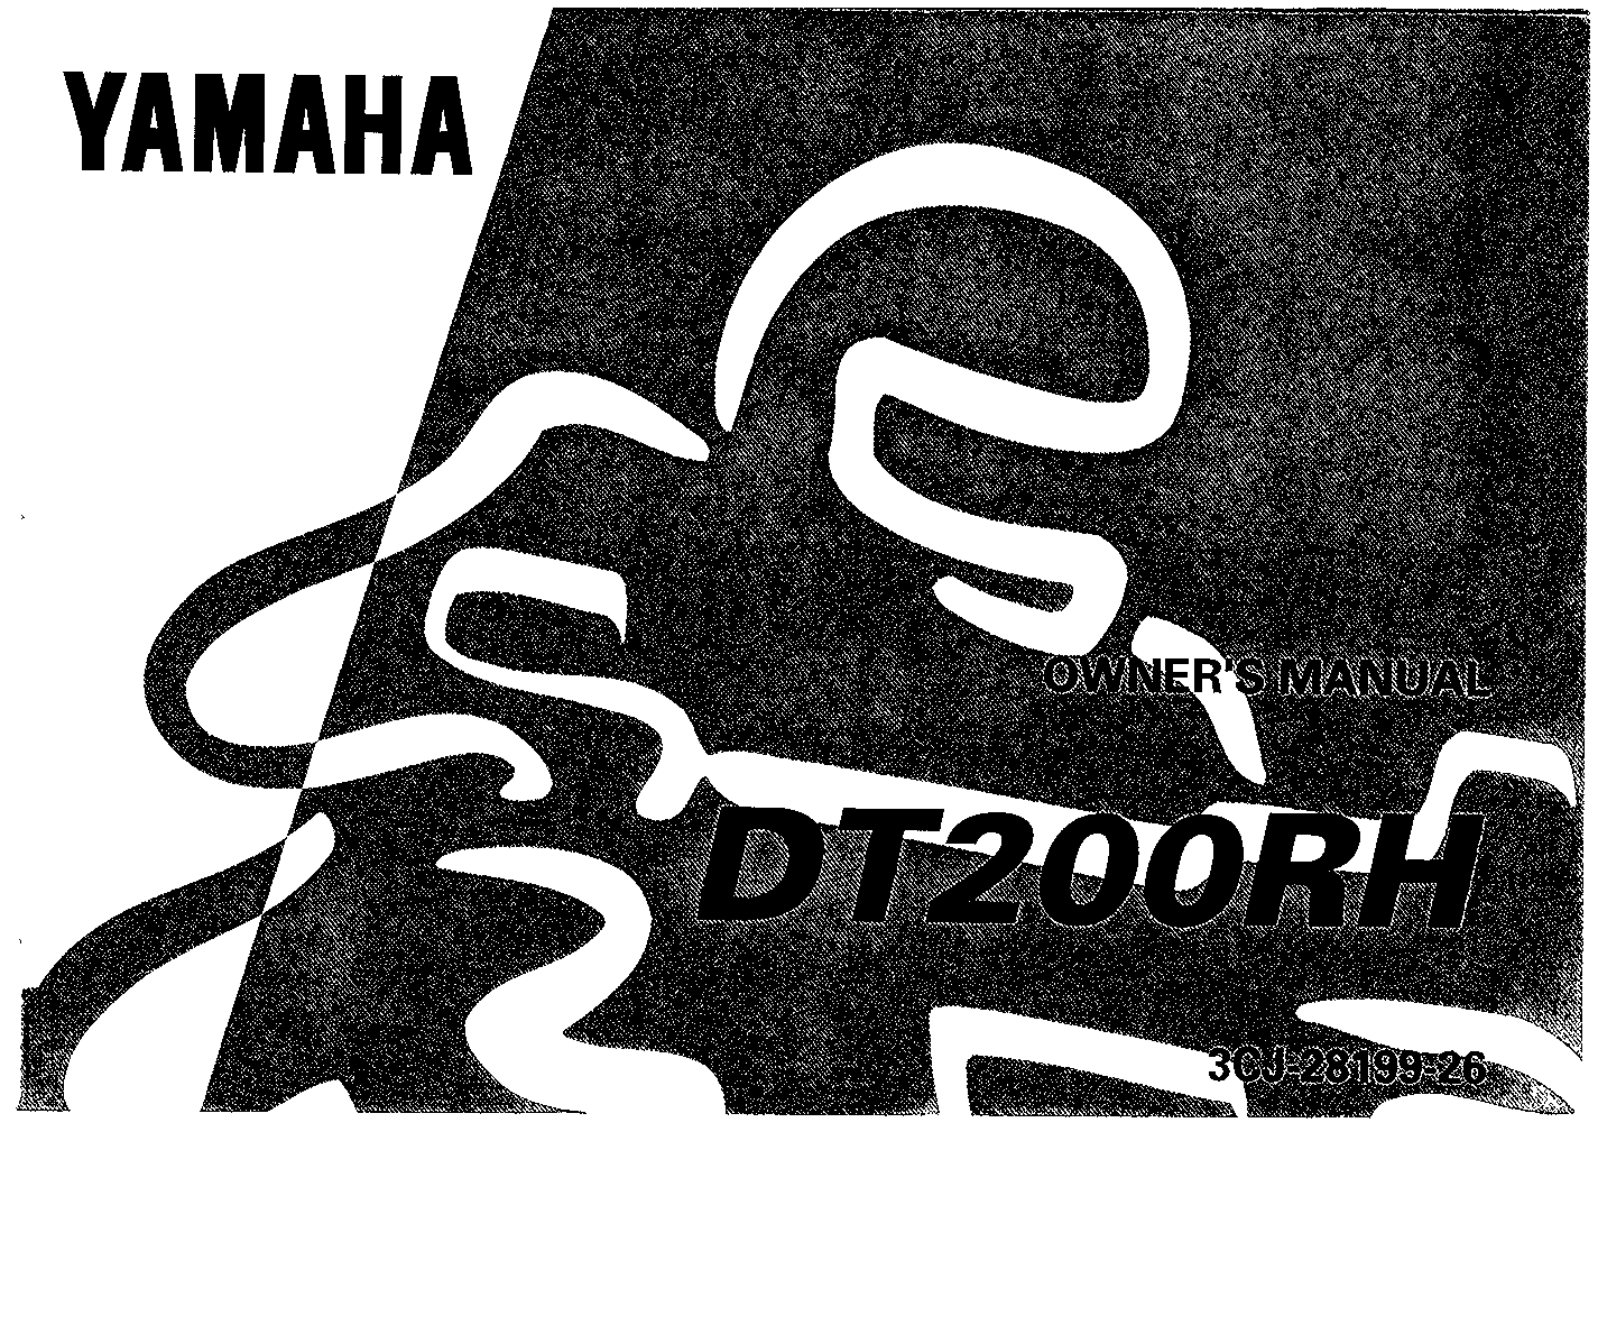 Yamaha DT200 RH 1996 Owner's manual